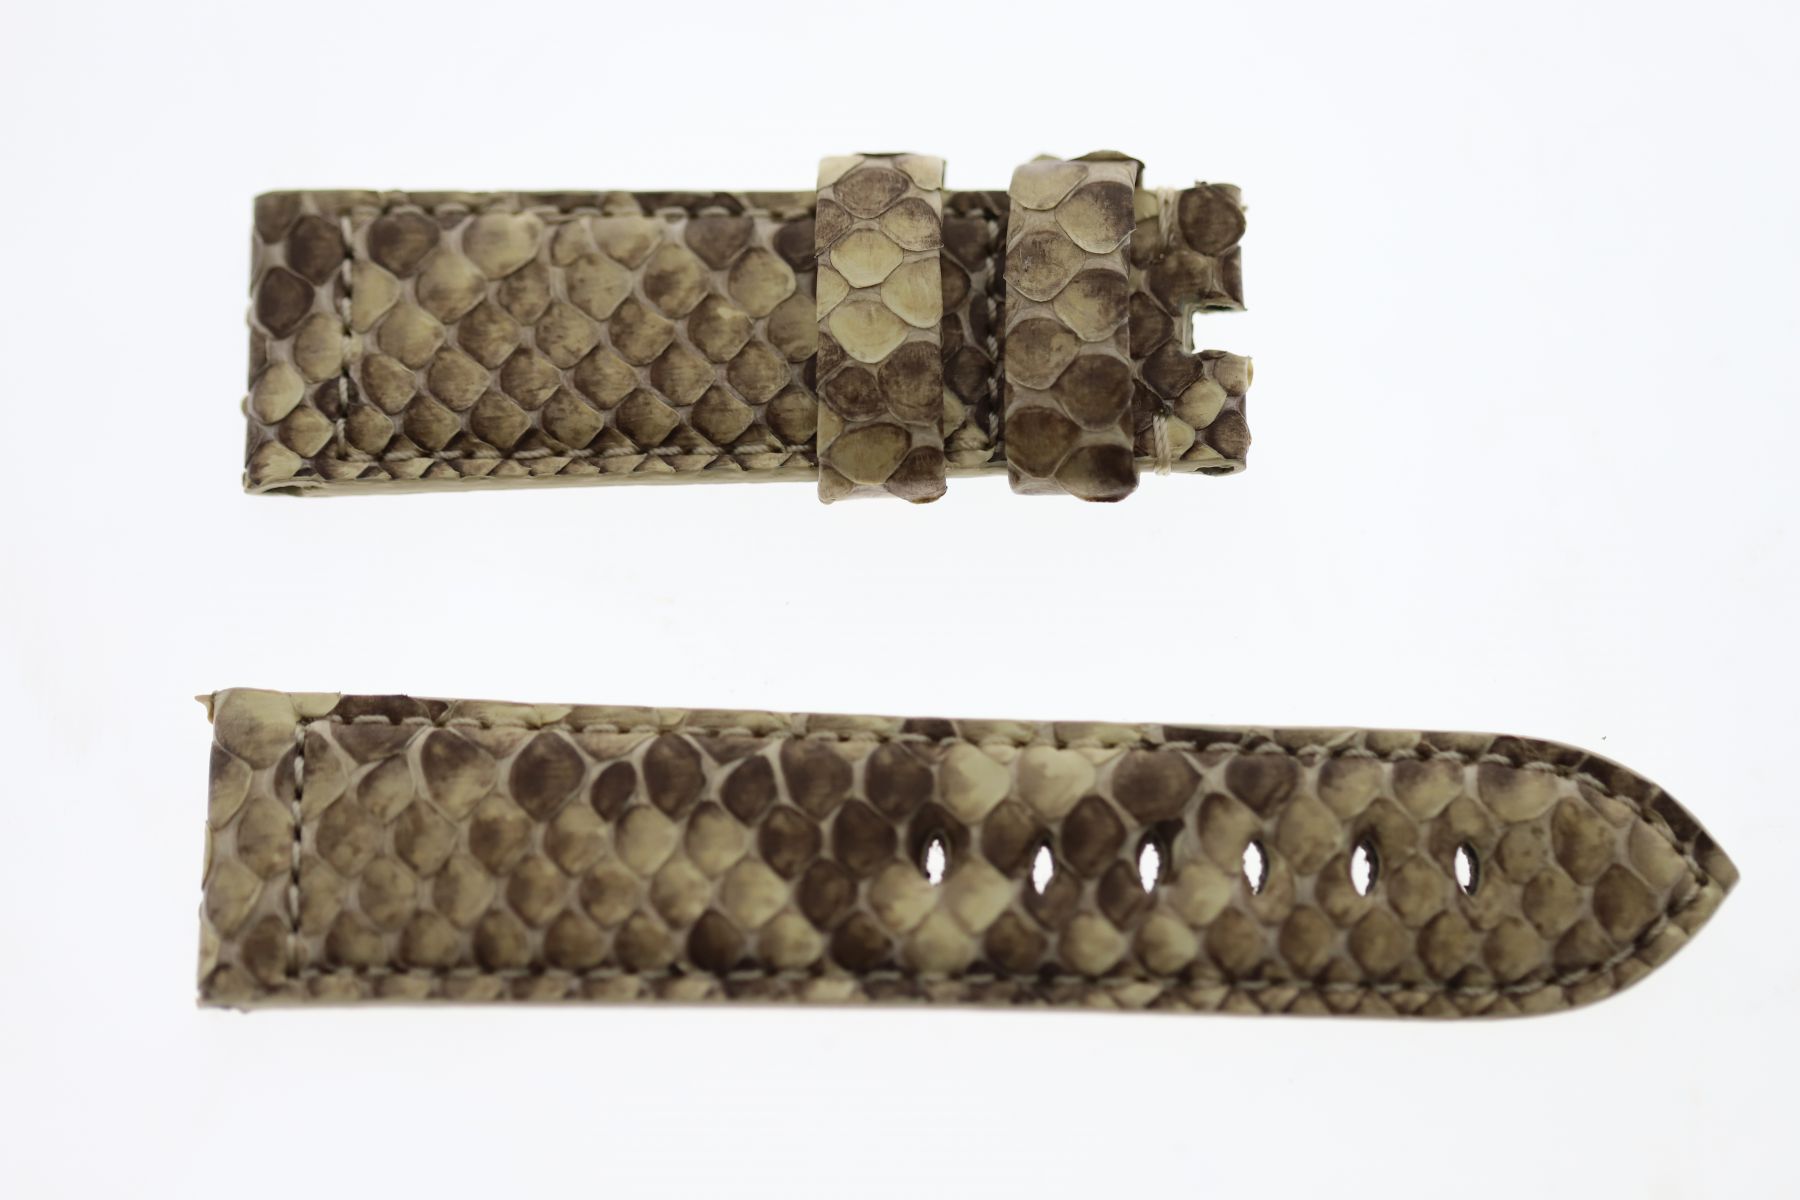 Sahara Sandy Beige Exotic Original Python leather strap Panerai style